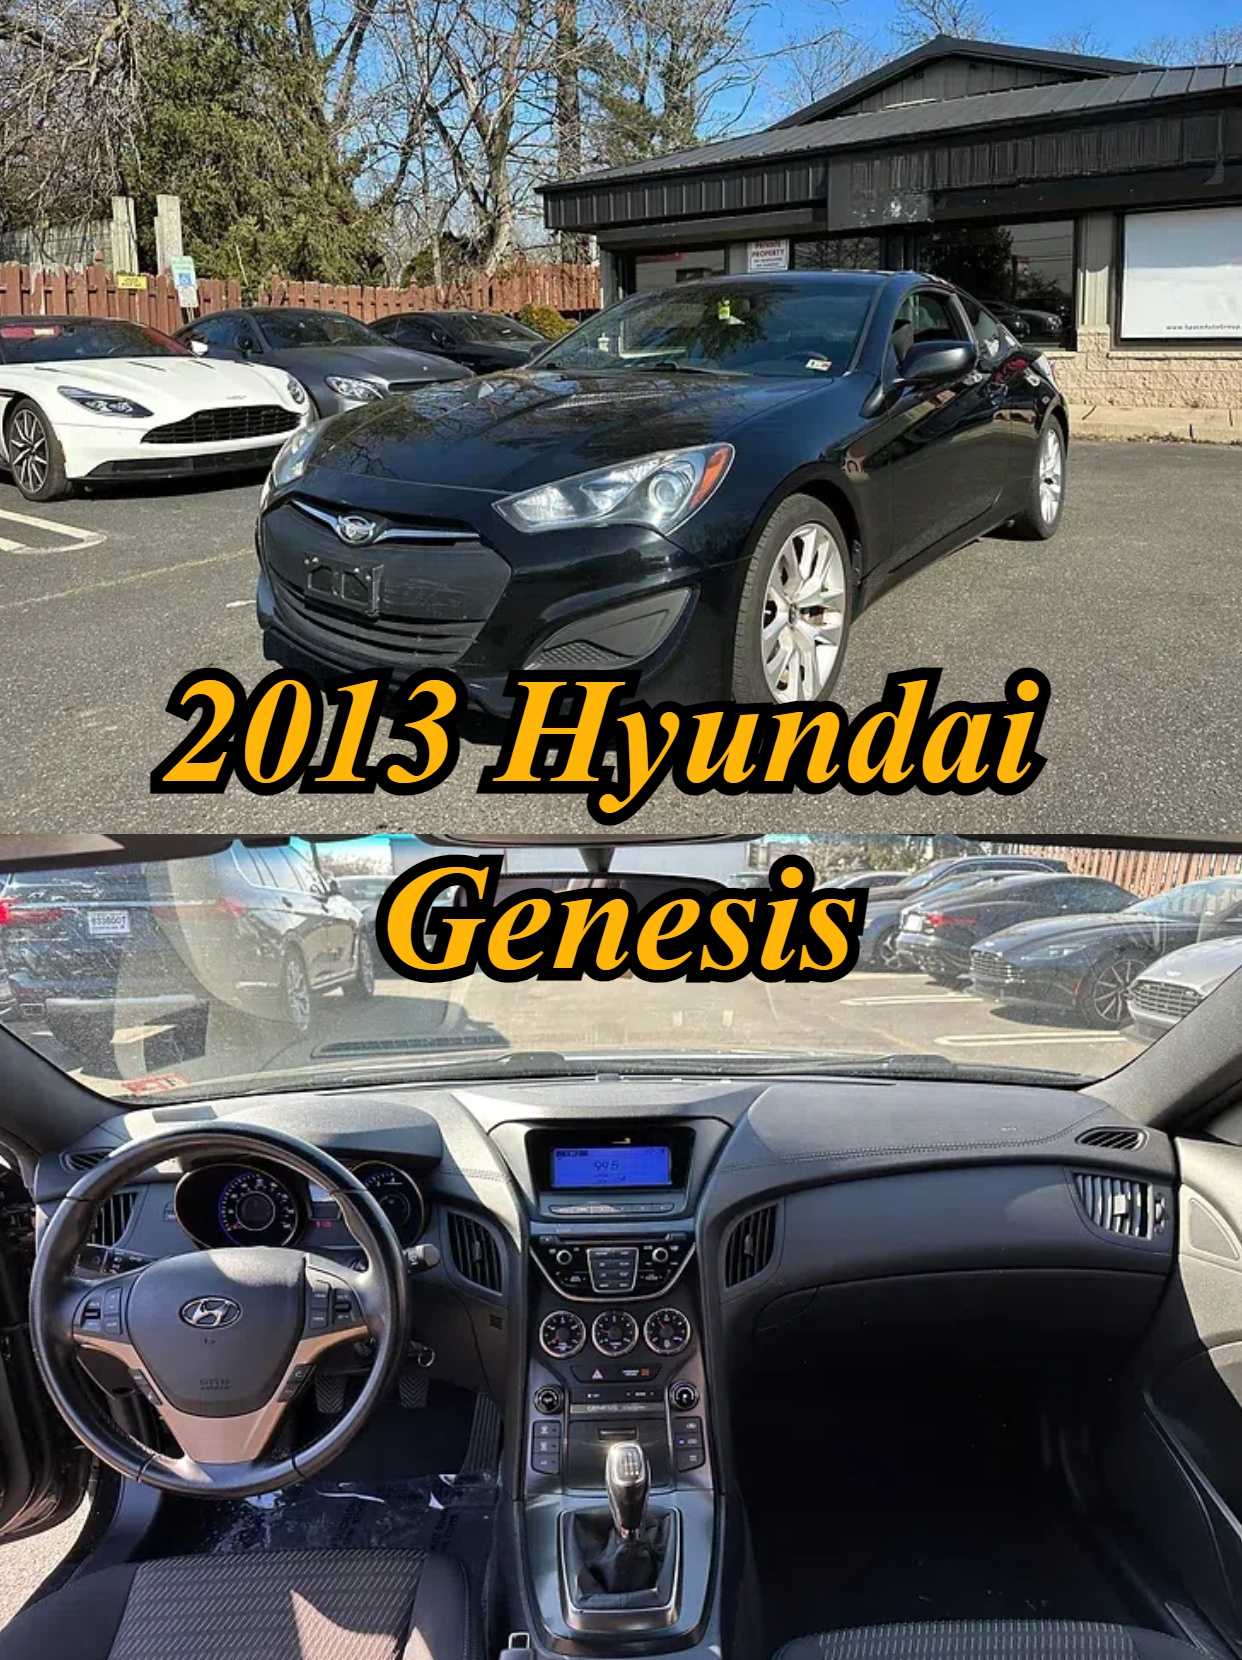 2013 Hyundai Genesis.jpg